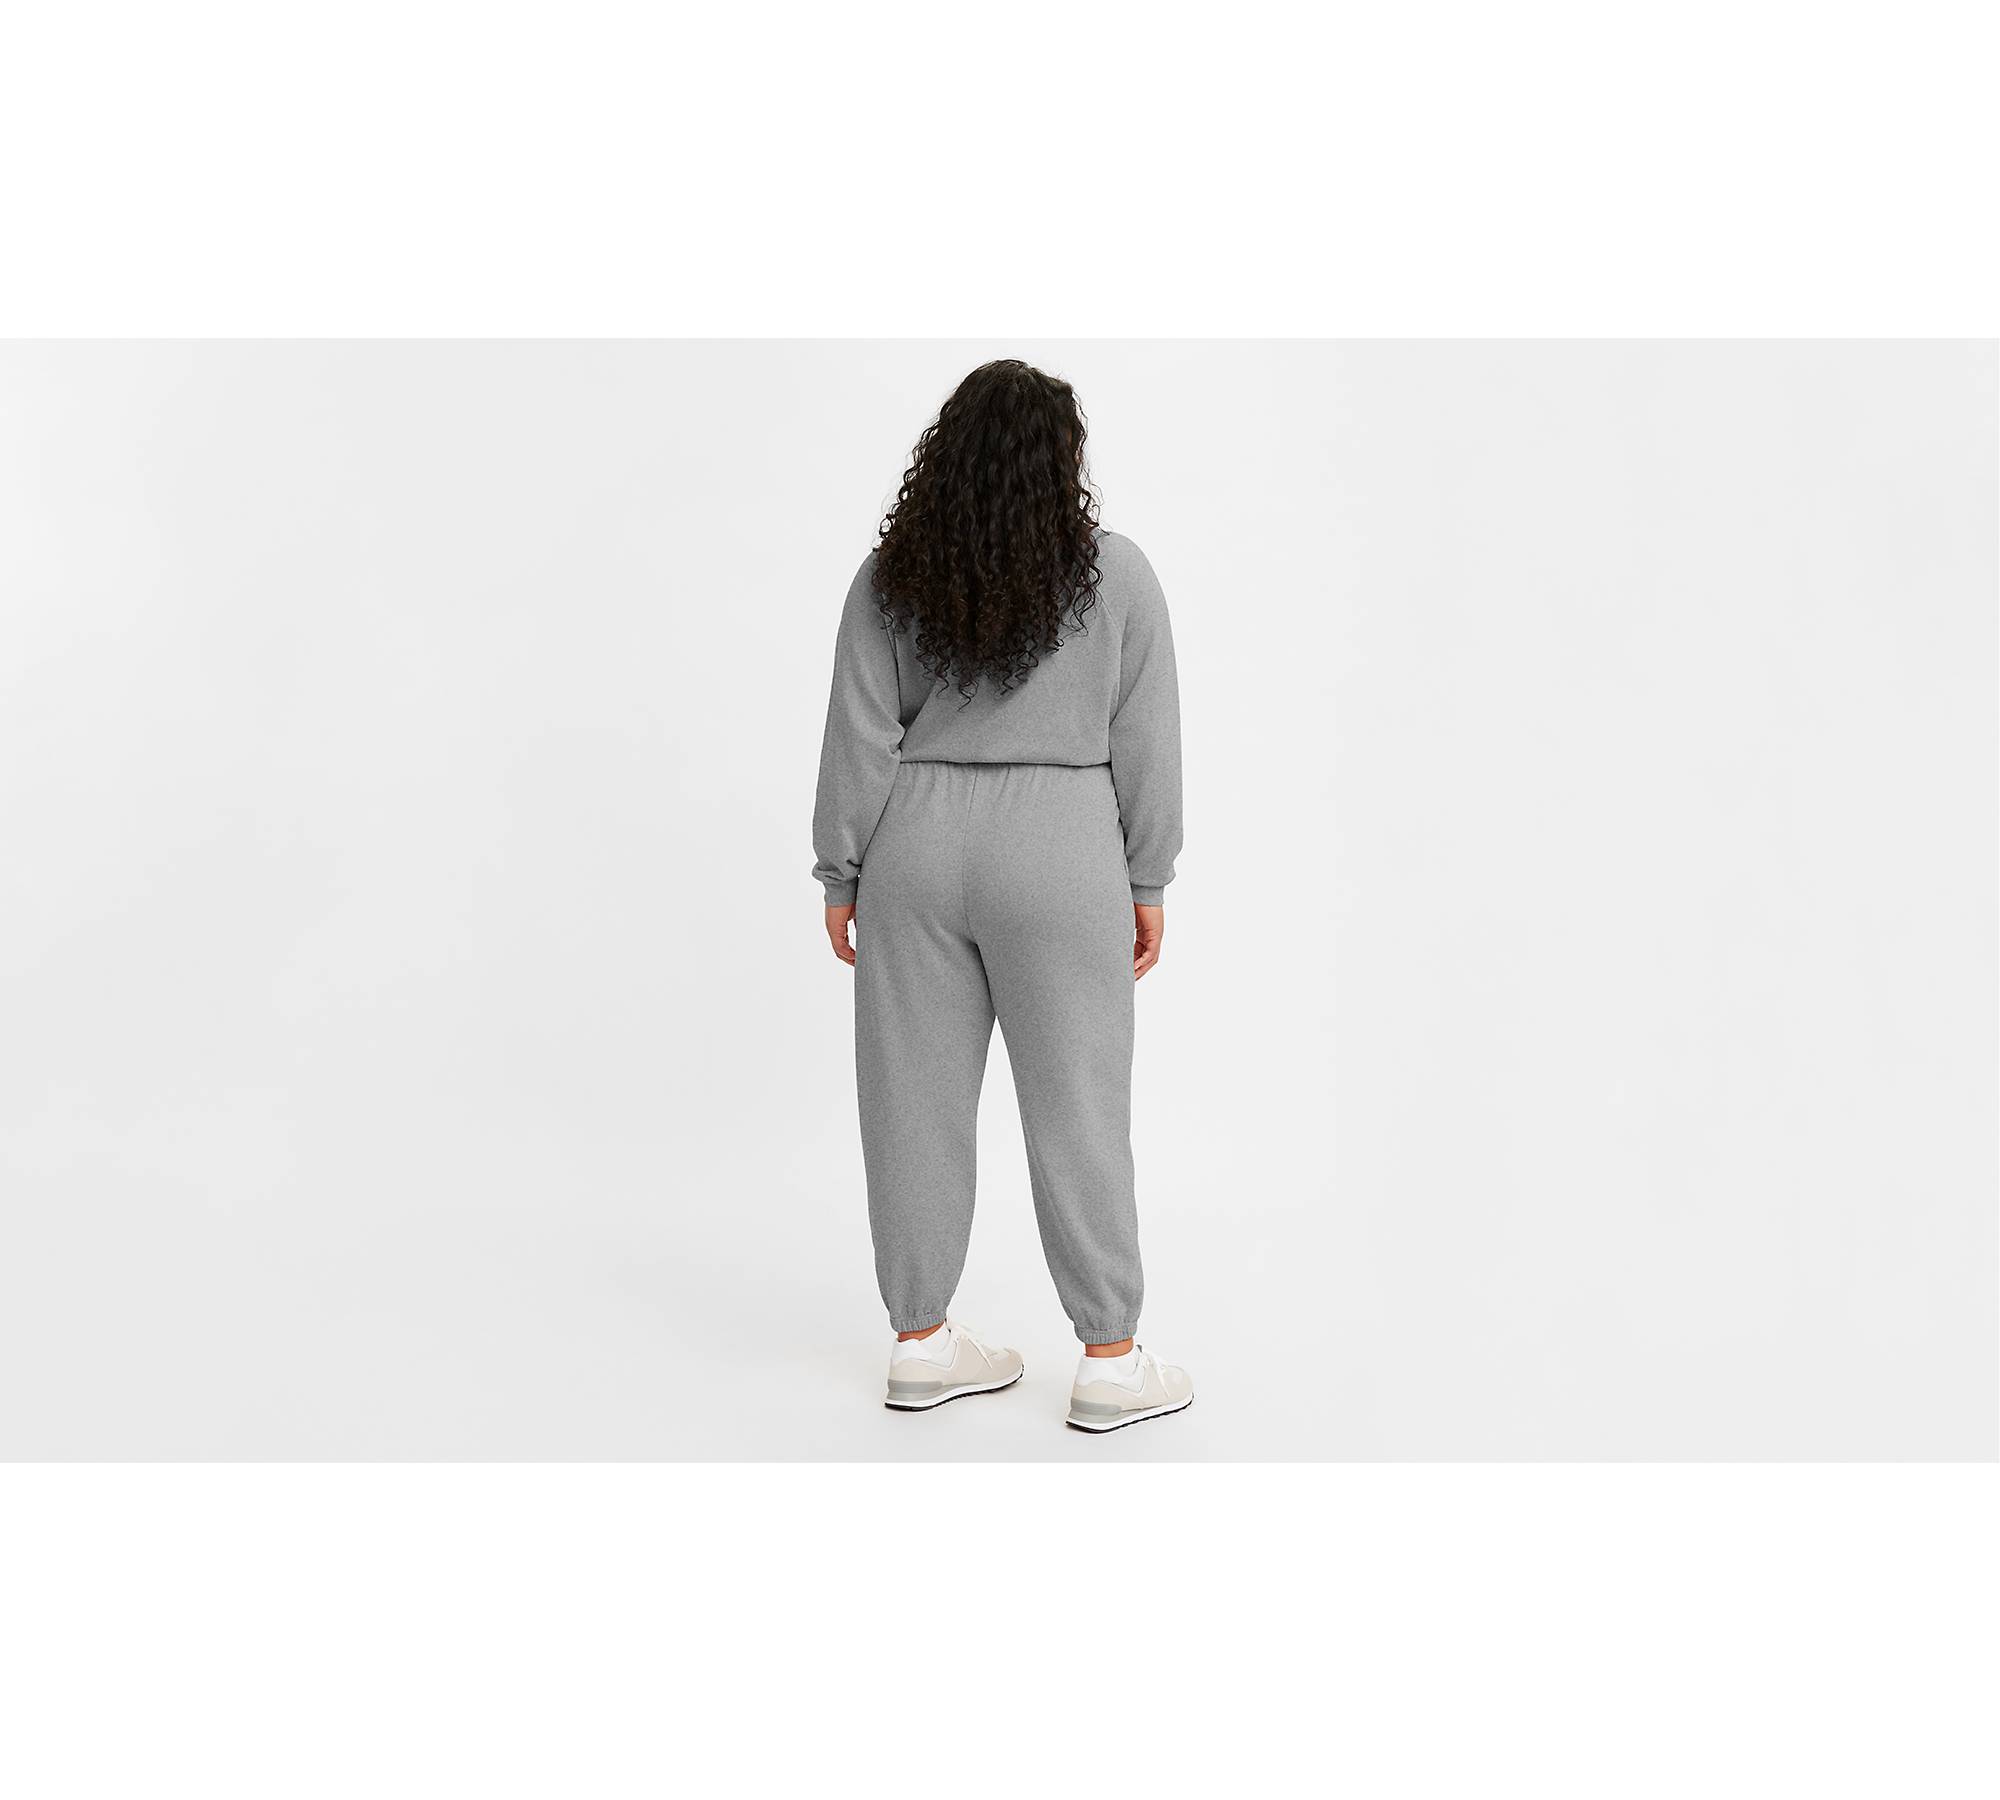 Buy All In Motion women plus size training sweatpants grey Online